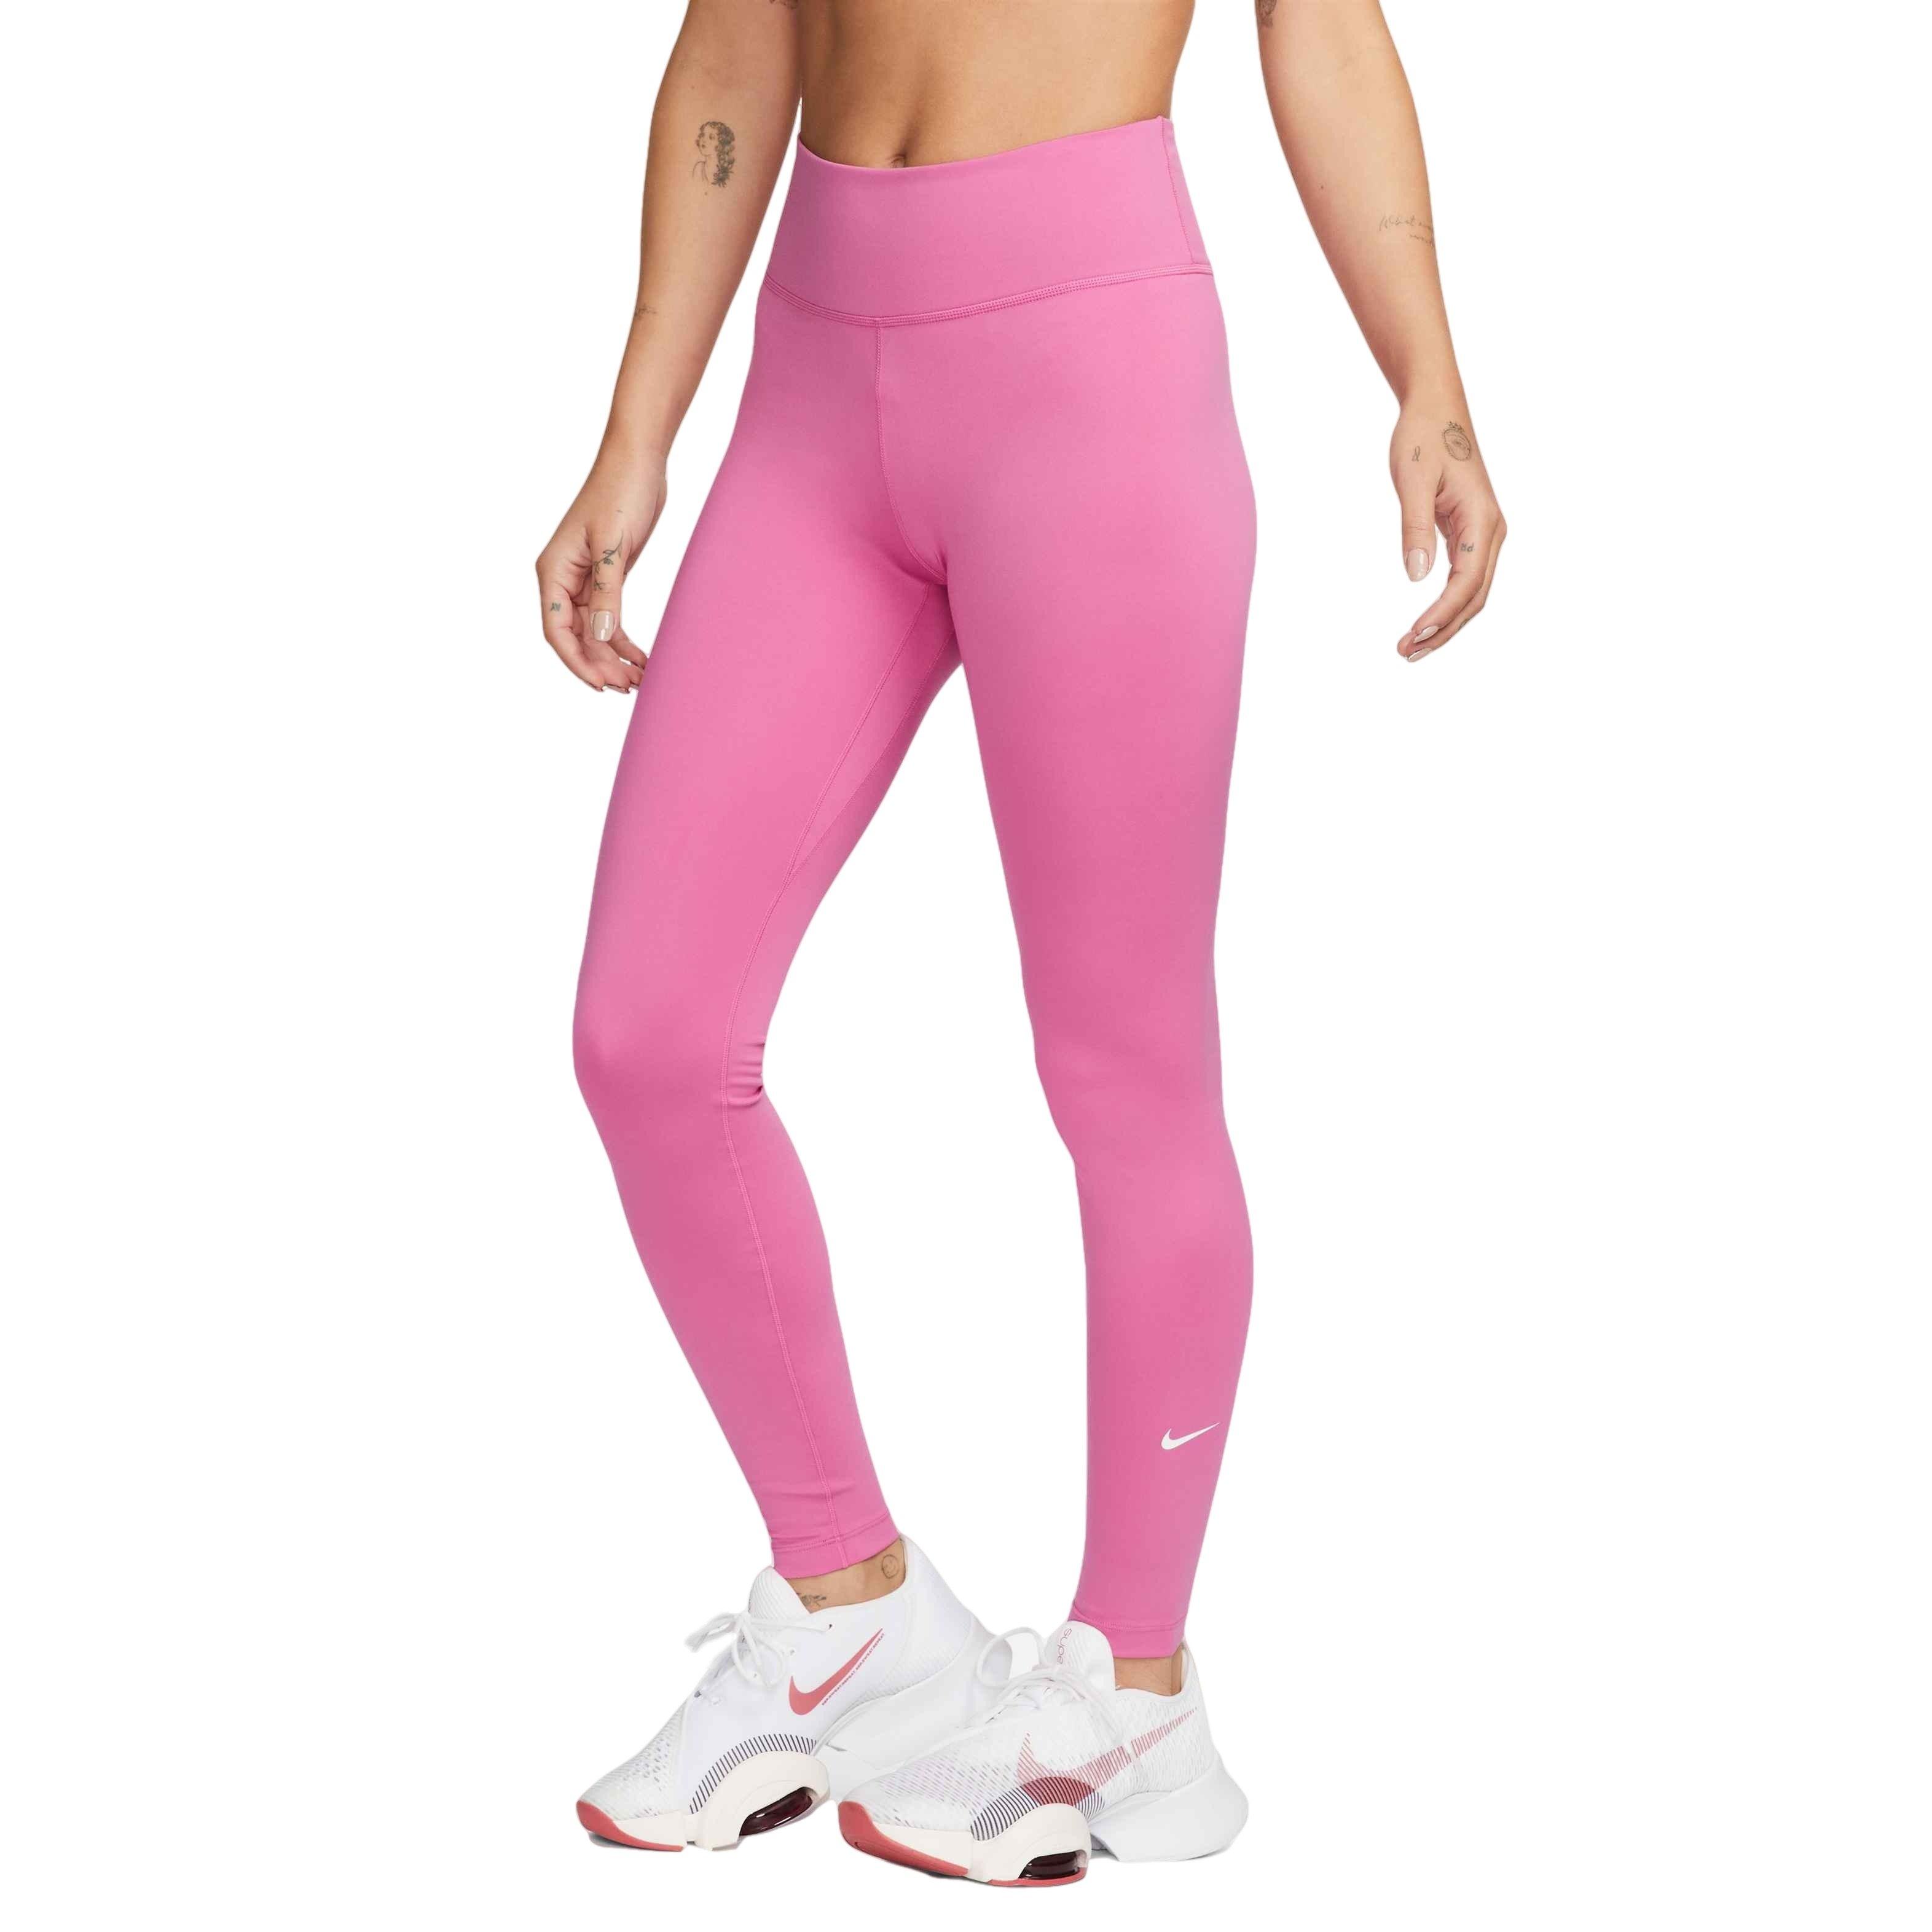 Women’s Sport Outfit: Double-face top + Python leggings 